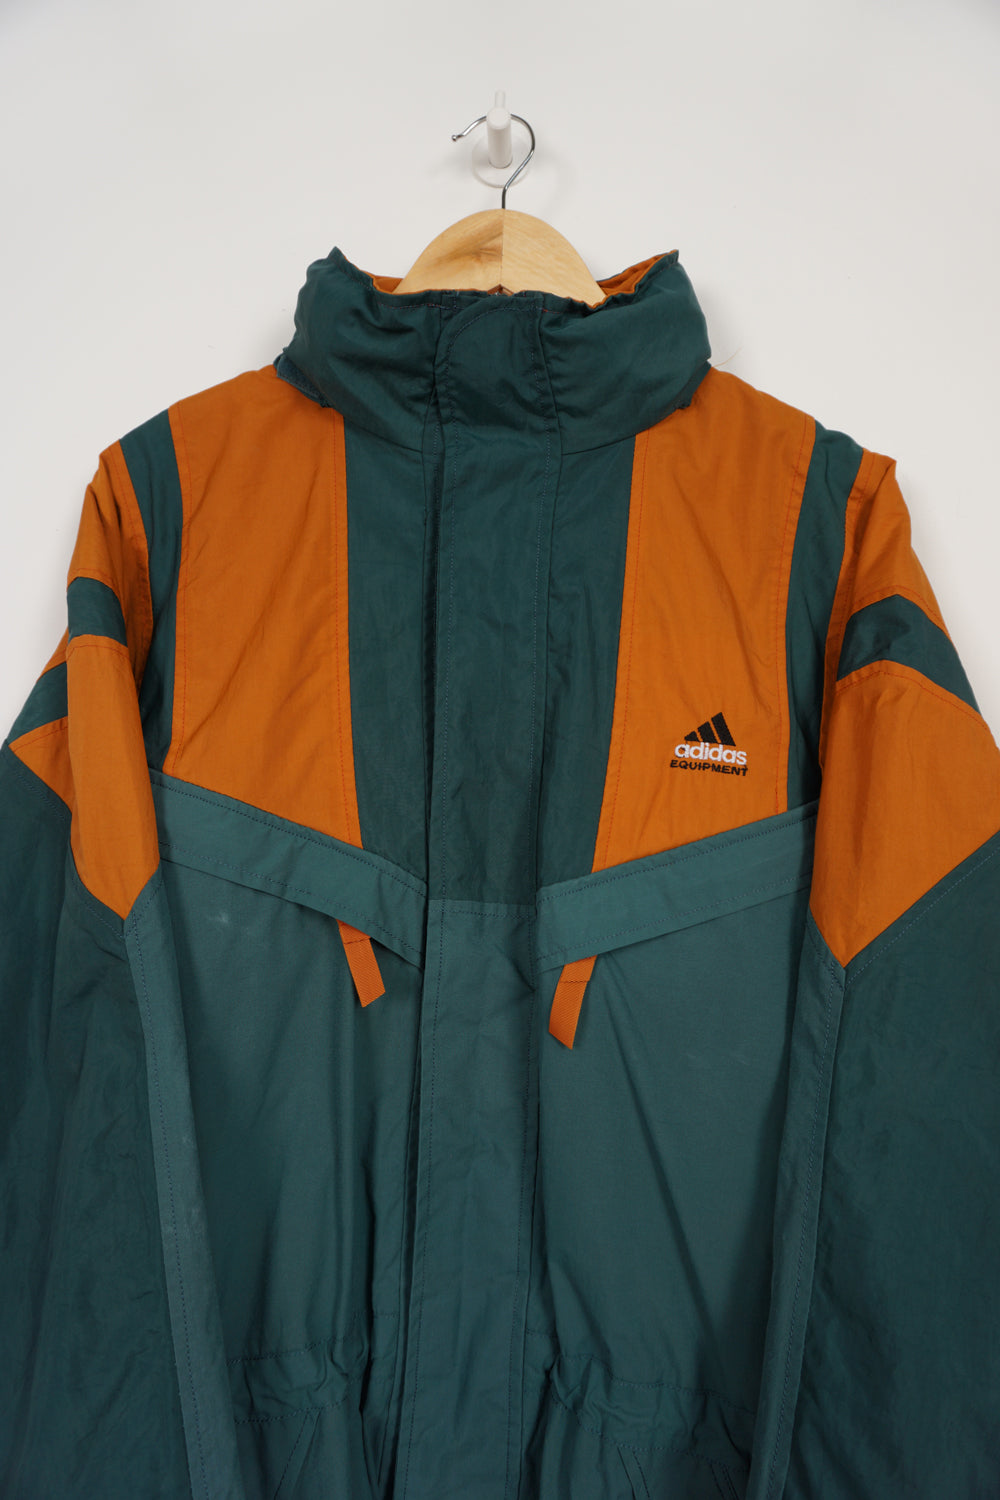 vaak Verwaarlozing Bisschop Adidas Equipment Jacket – VintageFolk